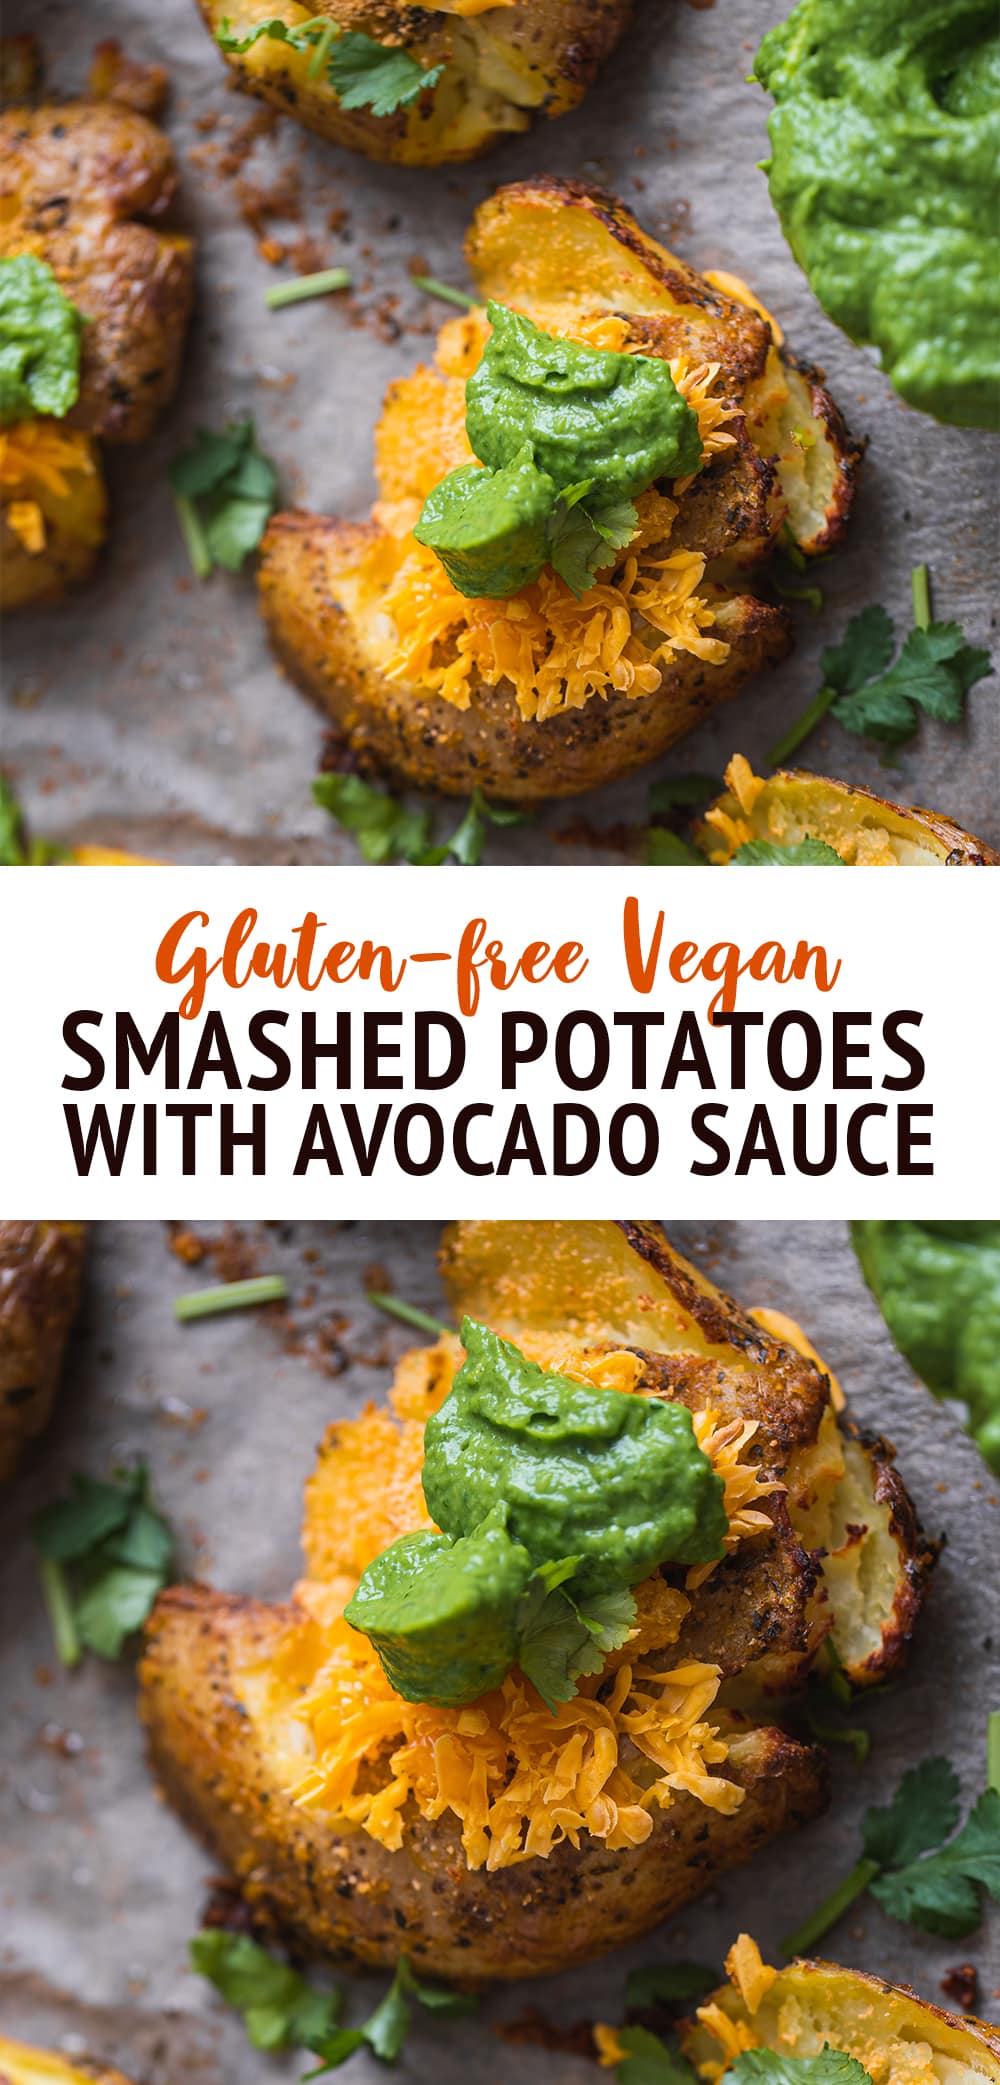 Vegan smashed potatoes with avocado sauce